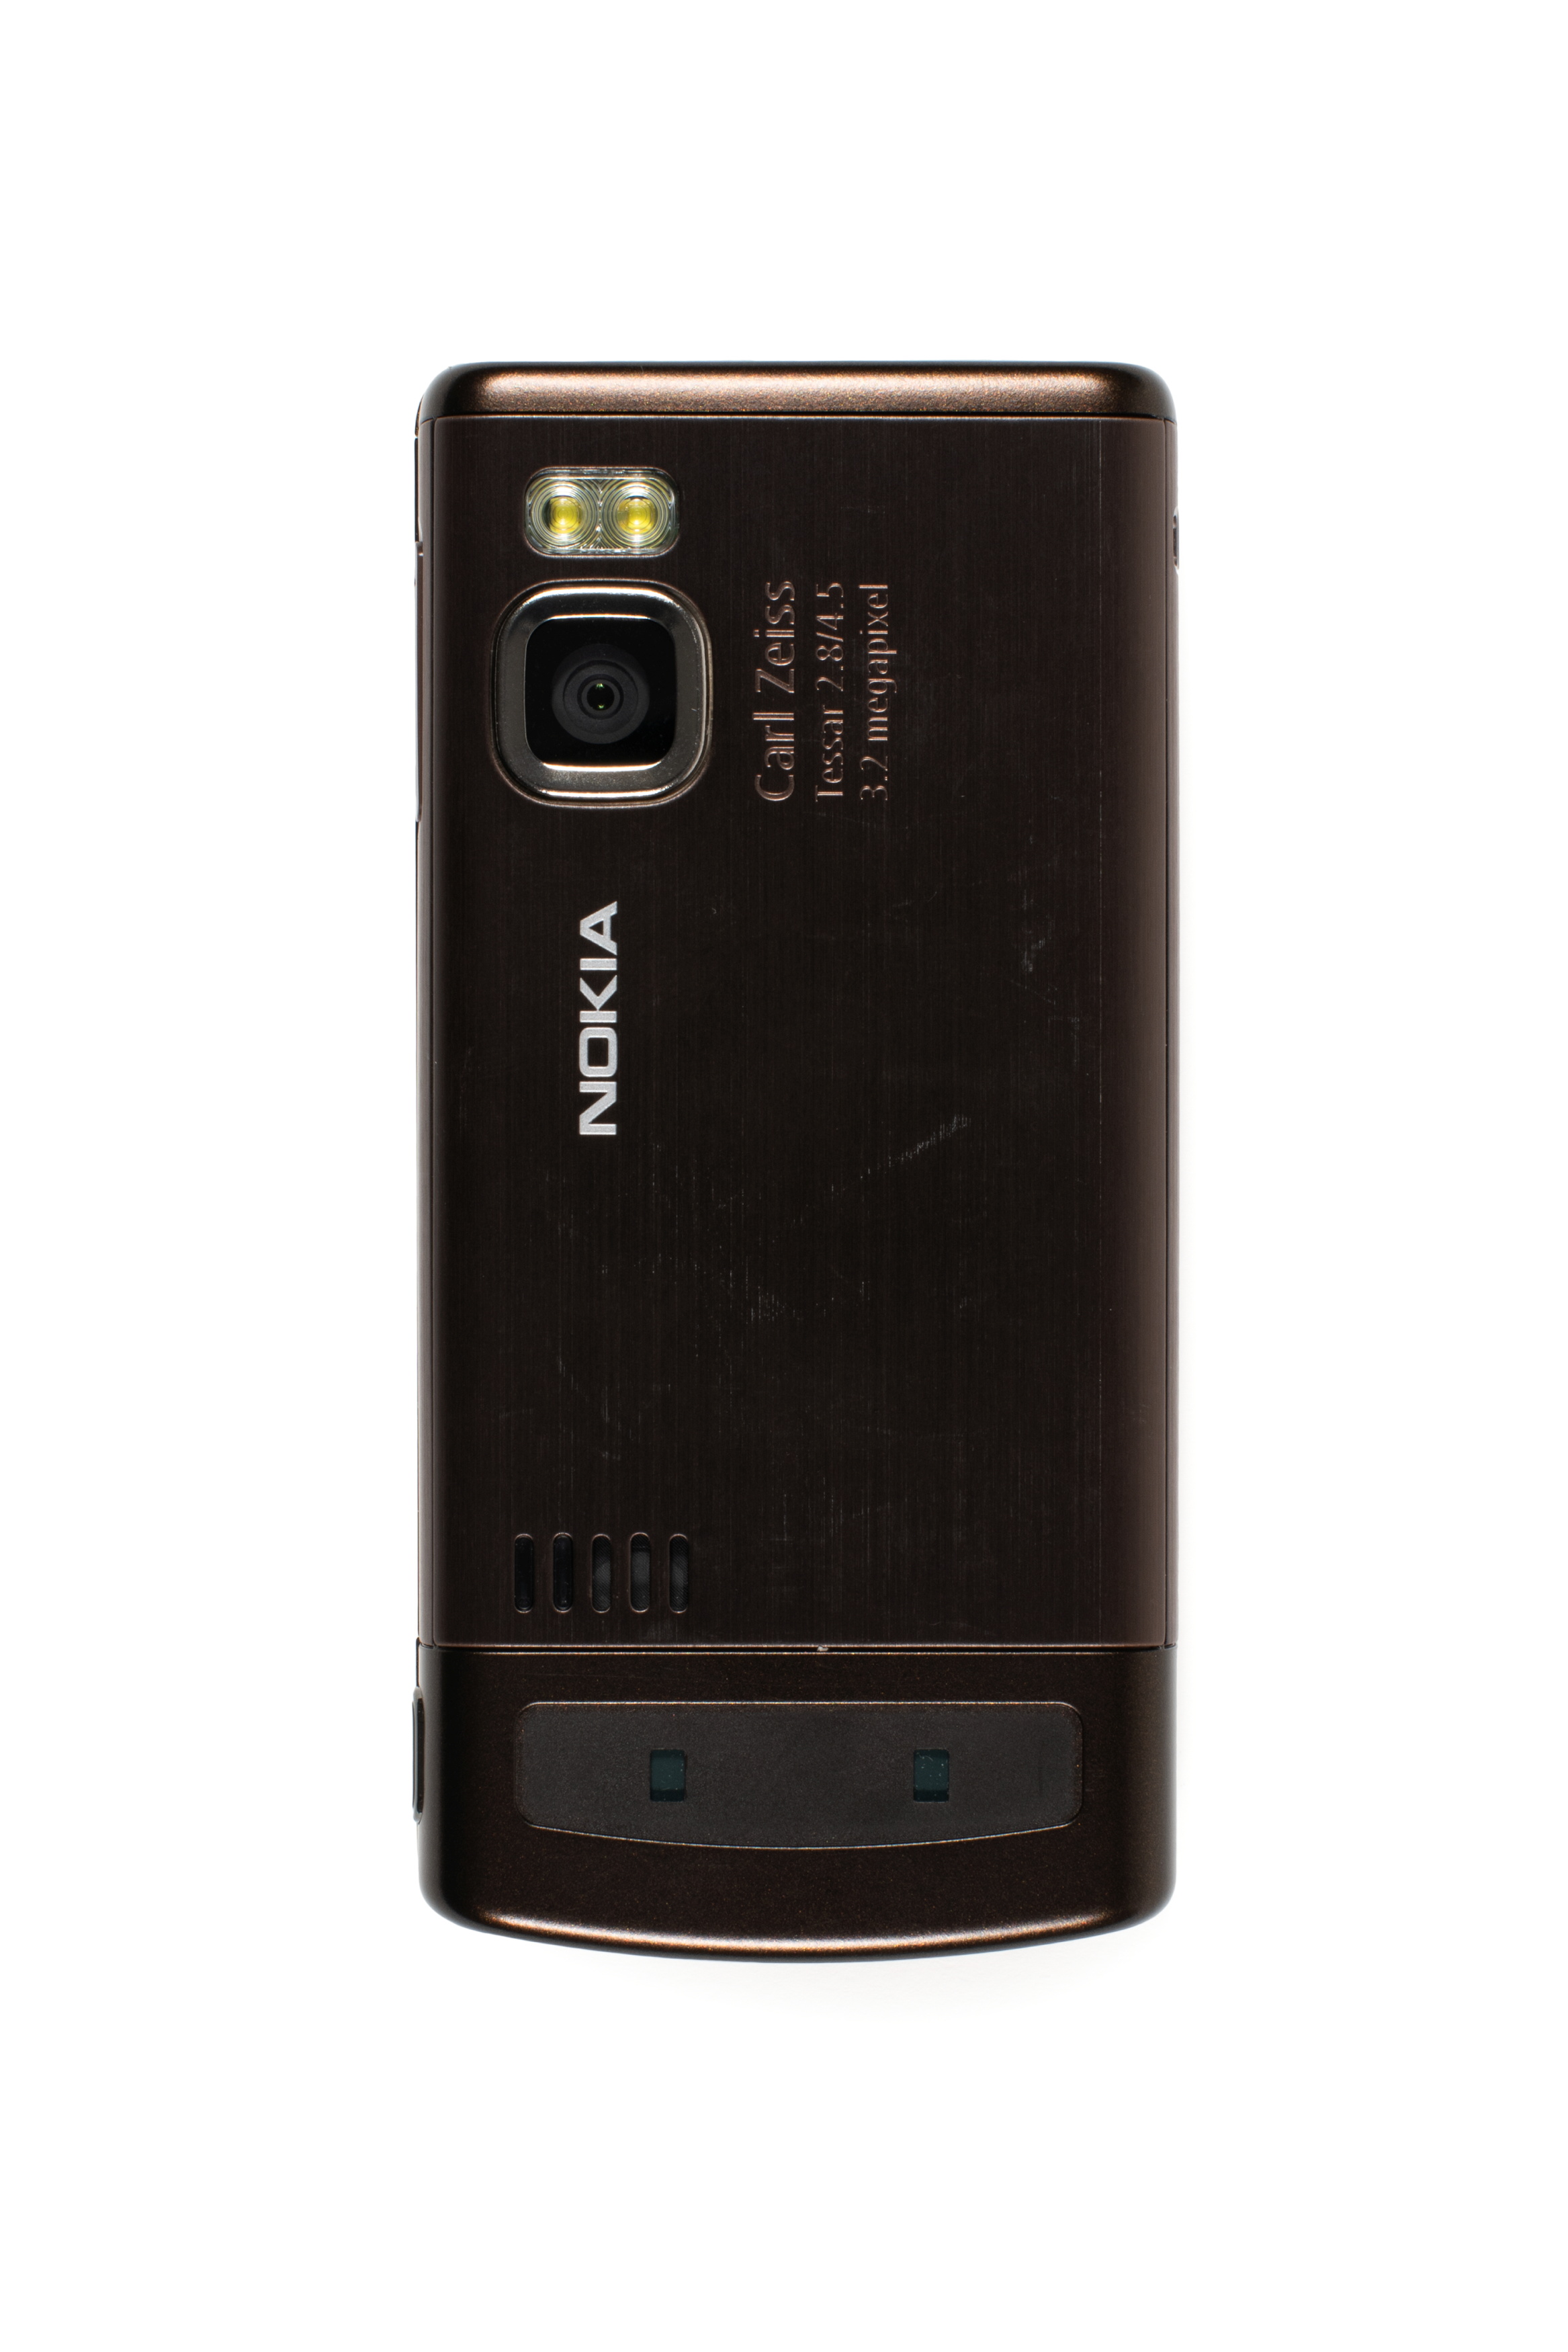 '6500s' model Nokia mobile telephone